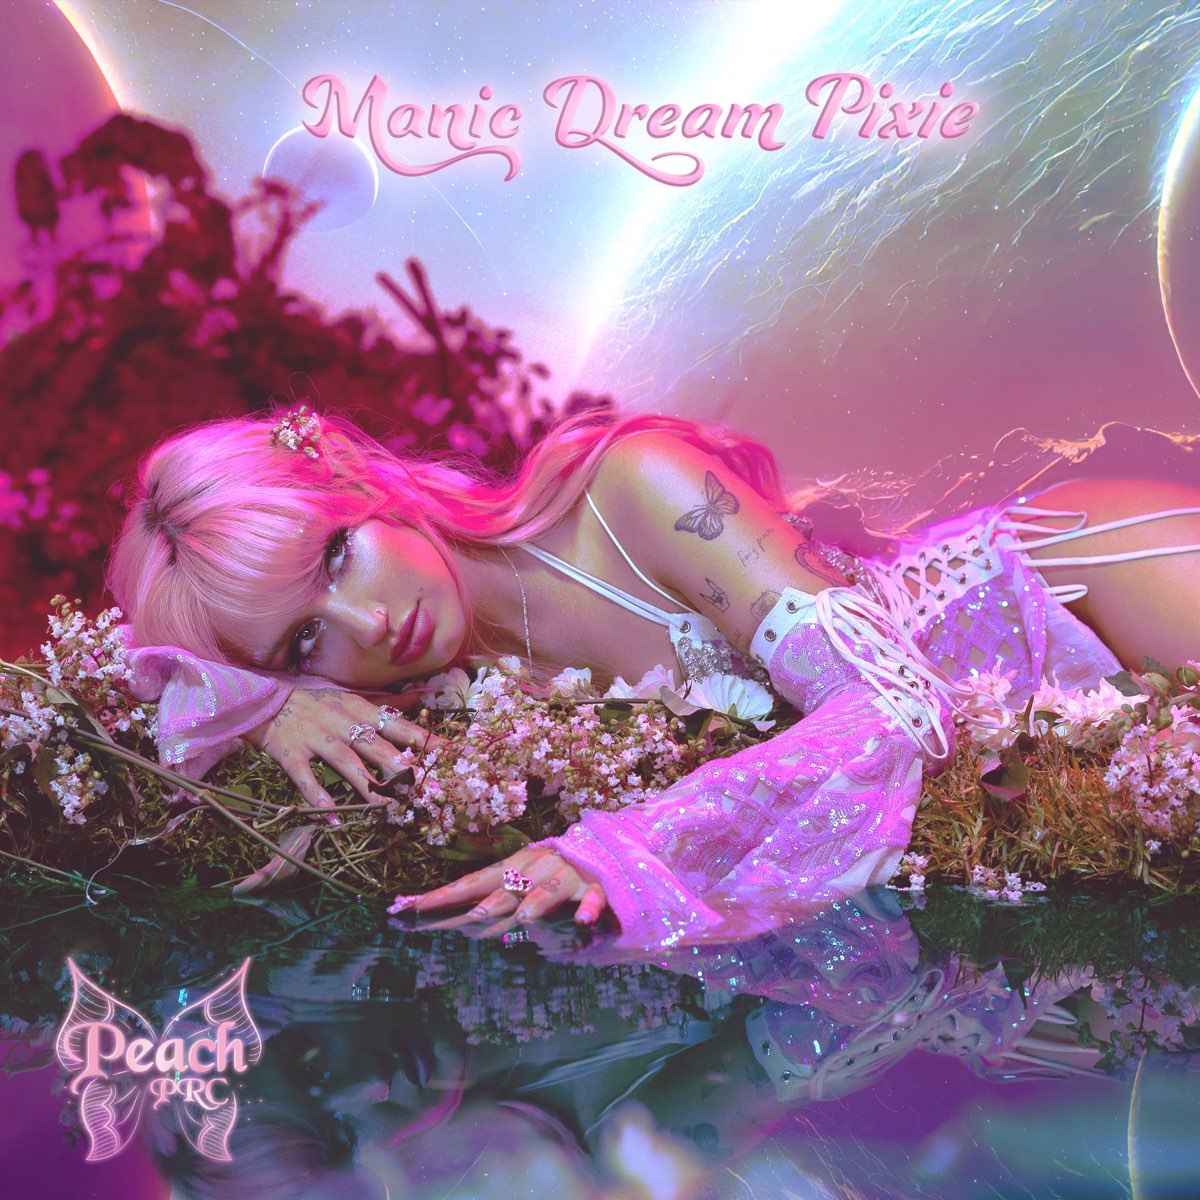 ‎manic Dream Pixie Ep By Peach Prc On Apple Music